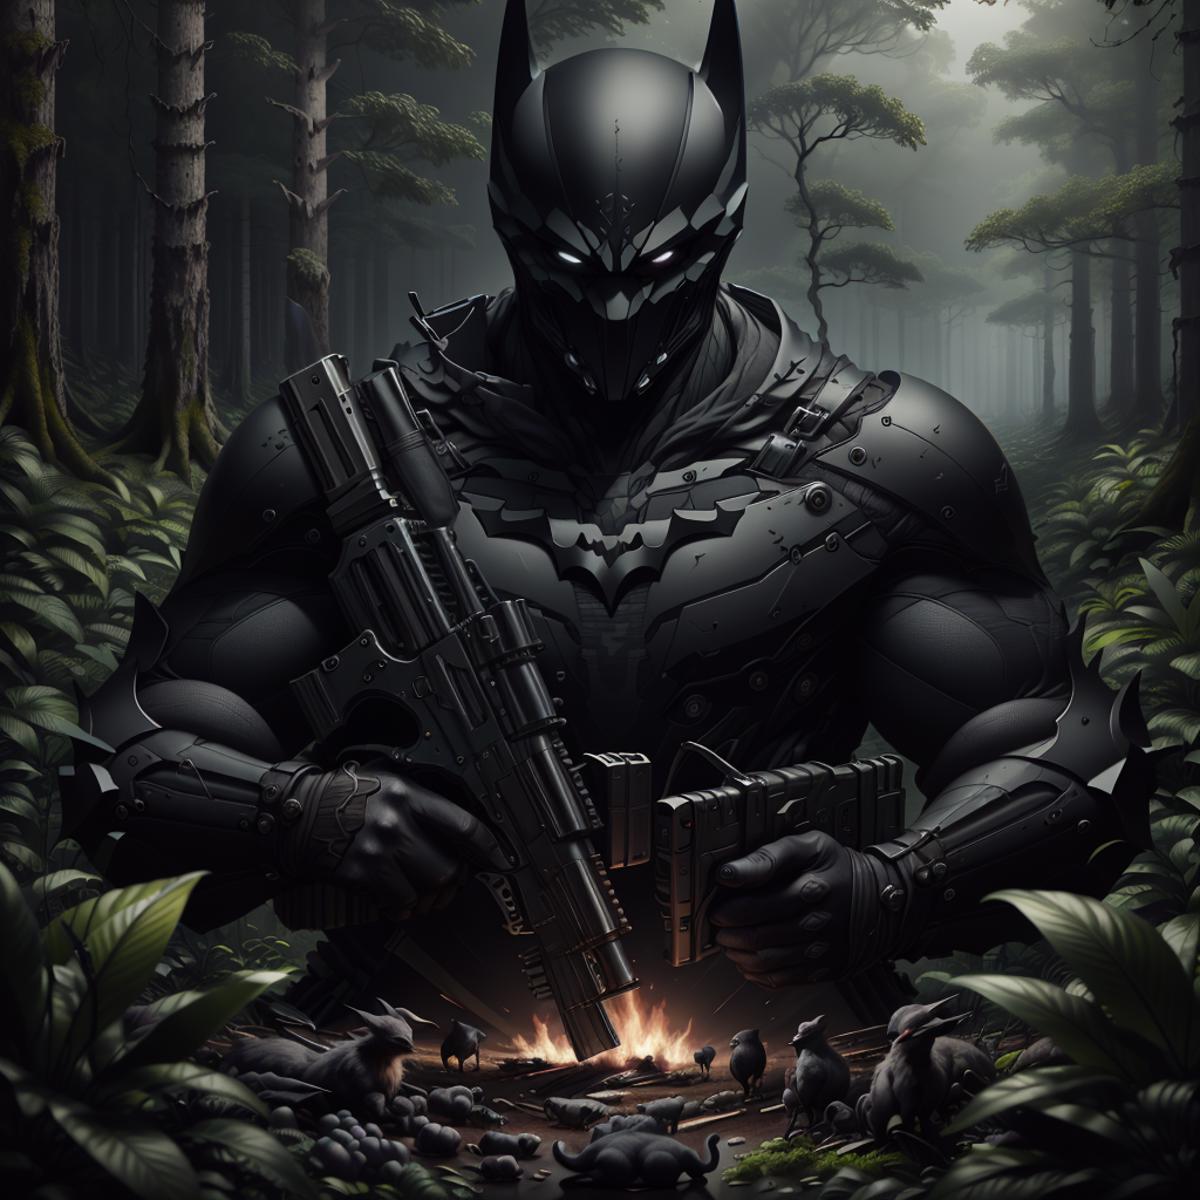 Batmancore - Batmanpunk - Batify Your Life! image by mnemic